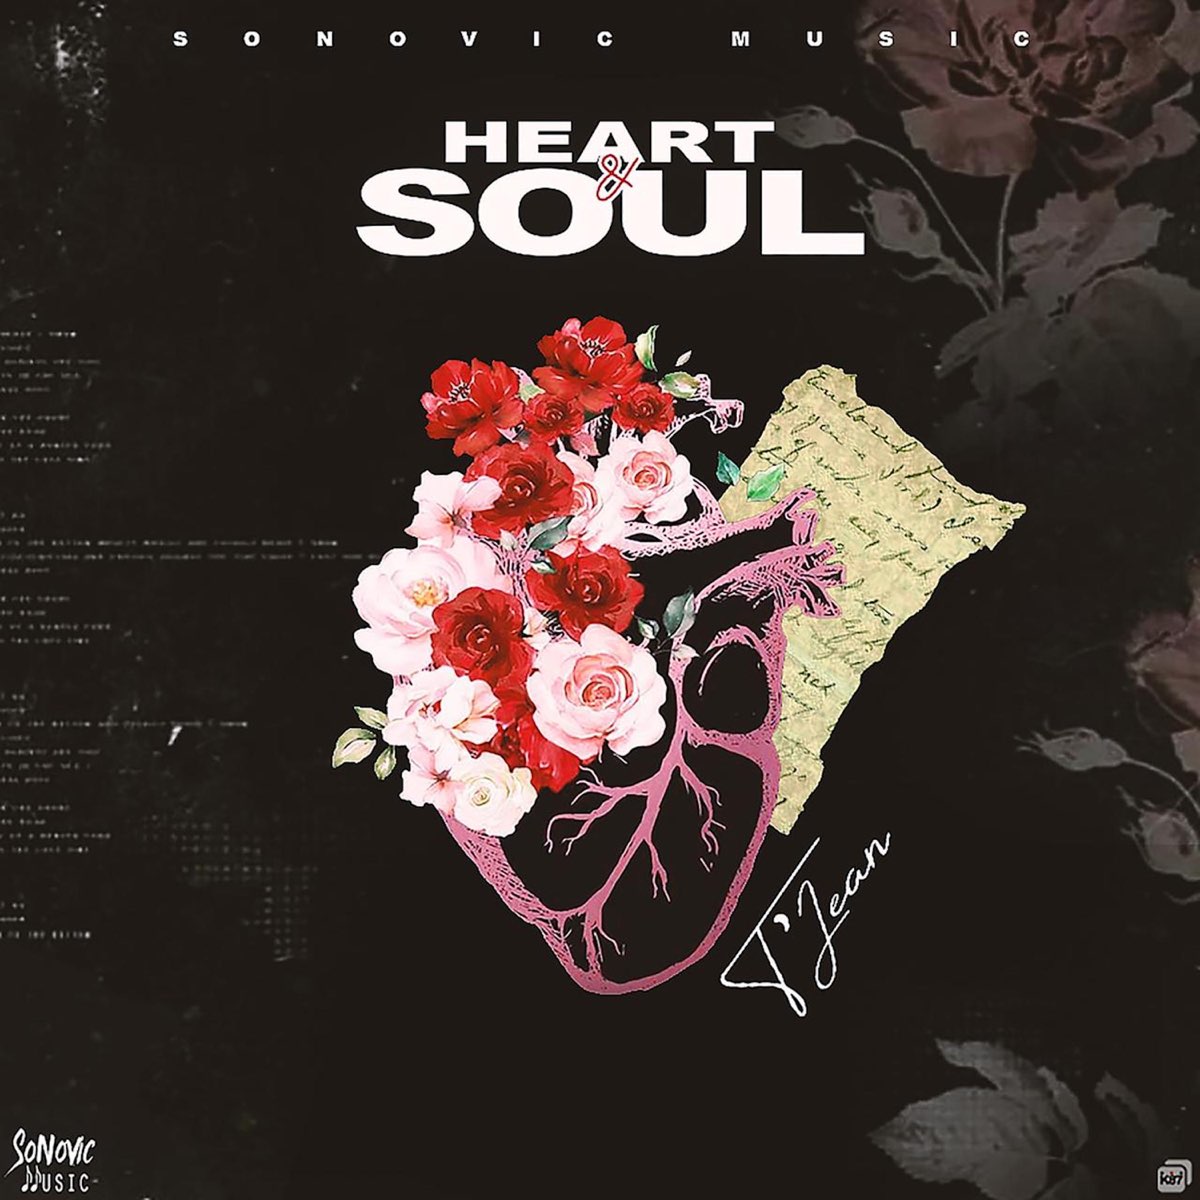 Loving heart soul. Heart and Soul. Hamilton Heart Soul. Альбом Heart & Soul: a Retrospective. Crop Heart & Soul.